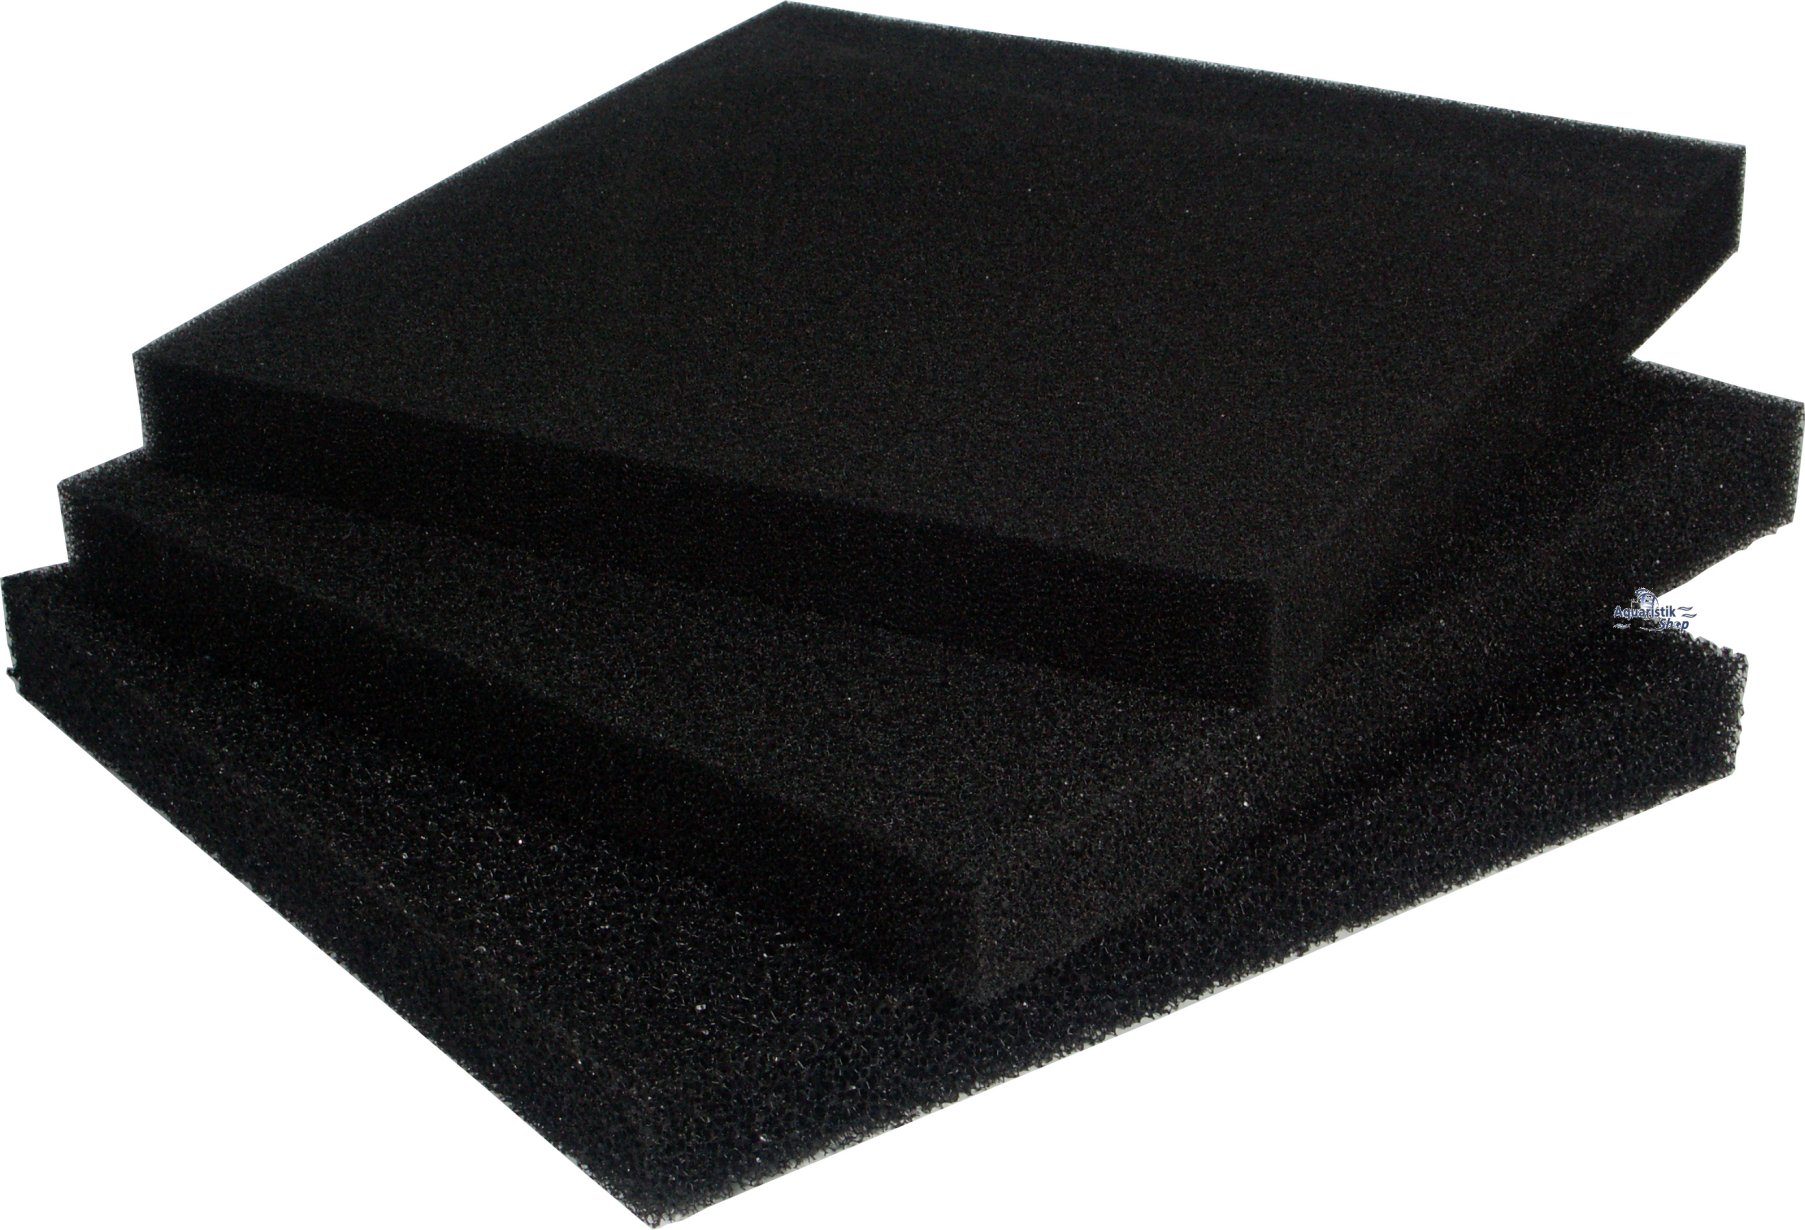 Filtermatte schwarz Filterschwamm Filterschaum 50 x 50 x 5 cm Grob 10 PPI 